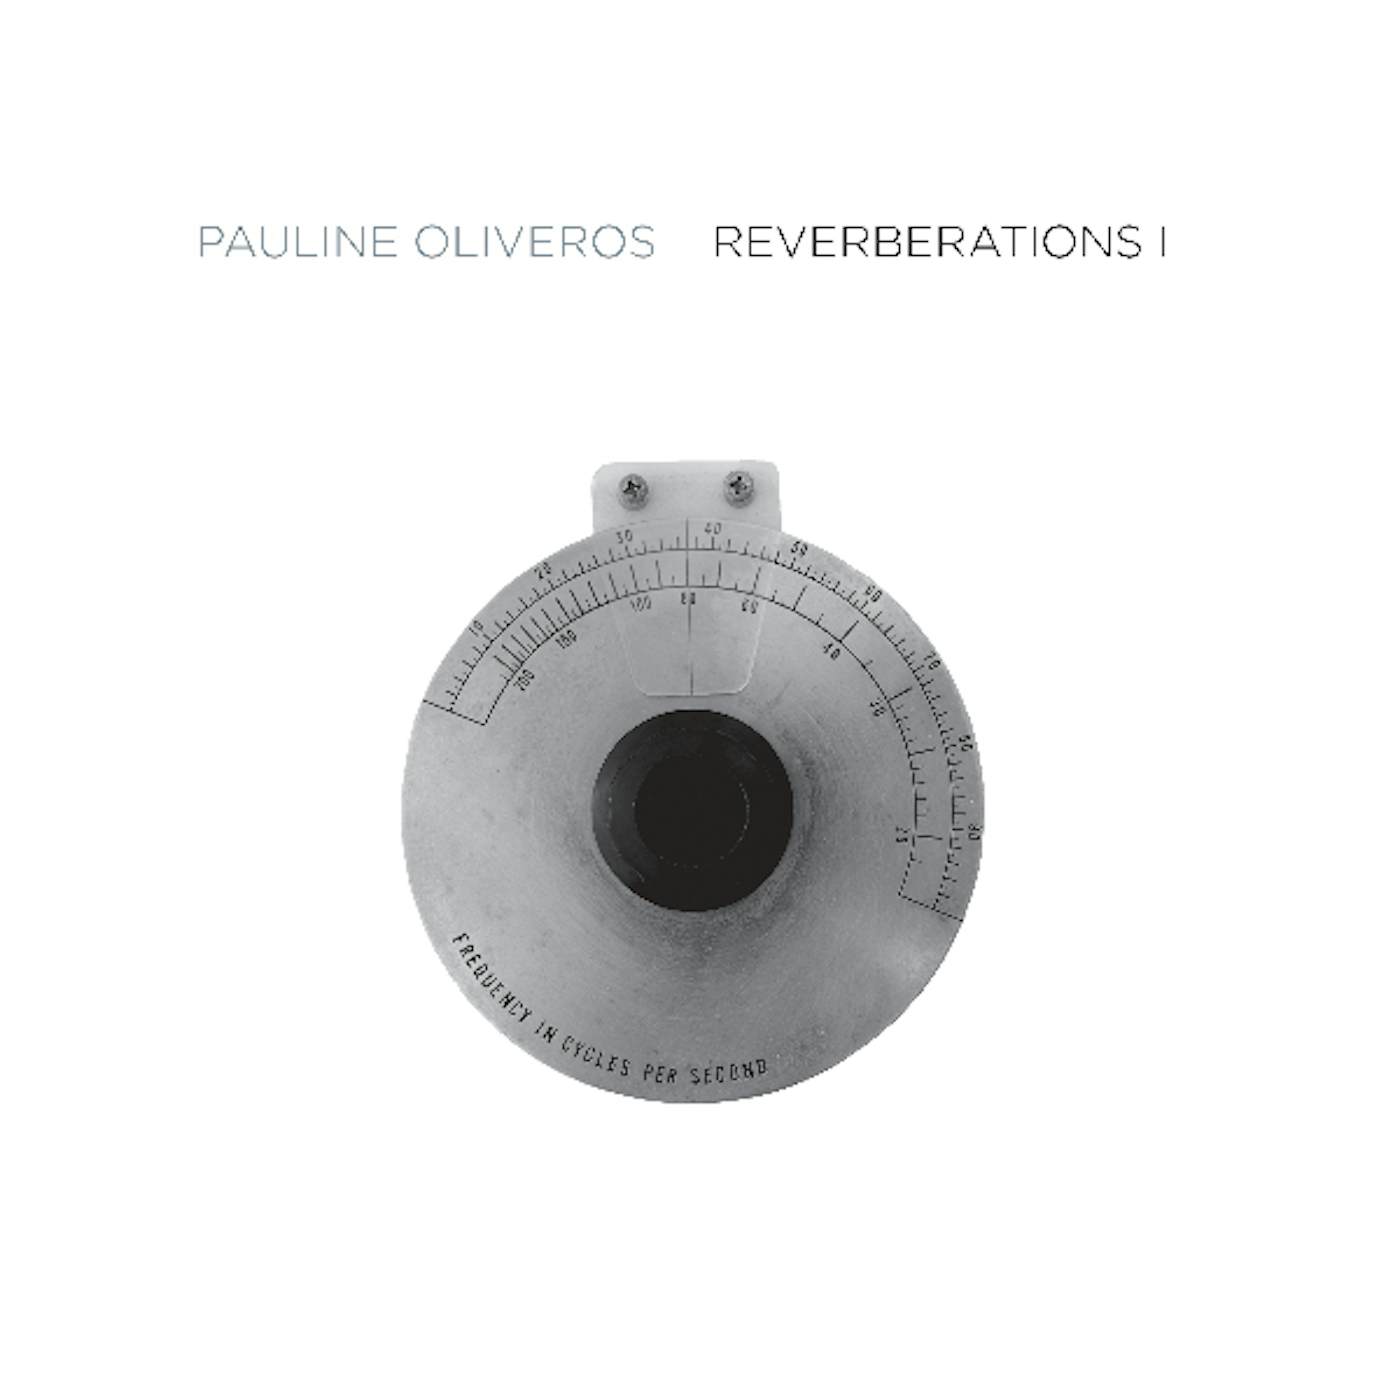 Pauline Oliveros REVERBERATIONS 1 Vinyl Record